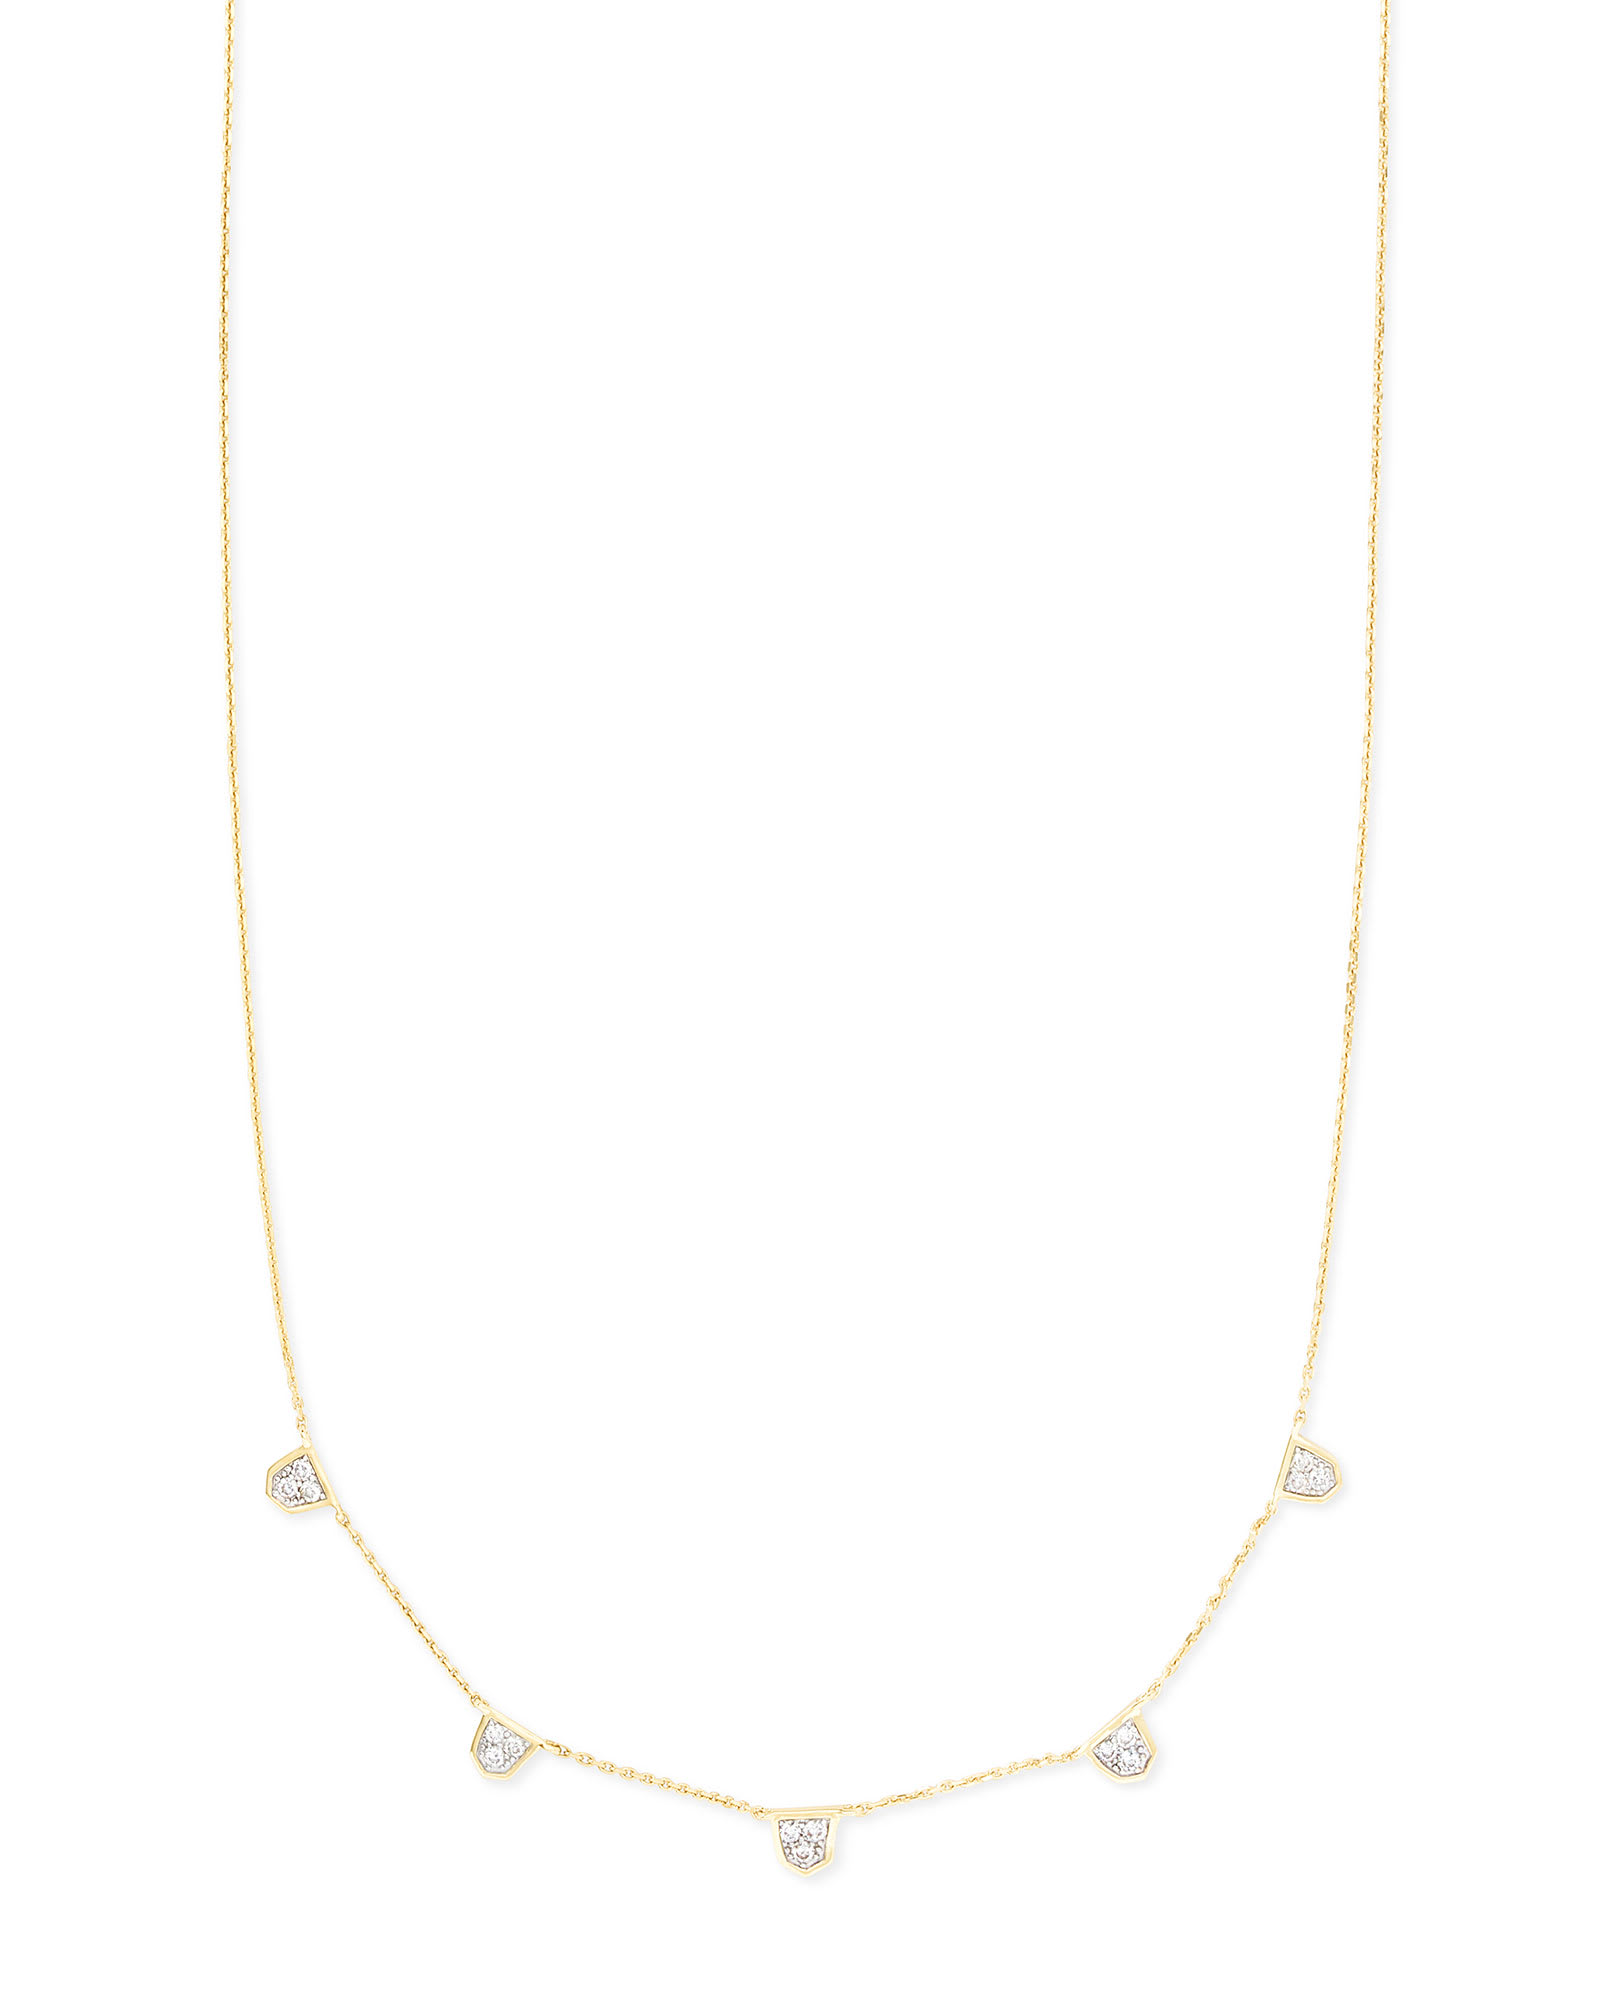 Kendra Scott Shannon 14k Yellow Gold Collar Necklace in White Diamond | Diamonds